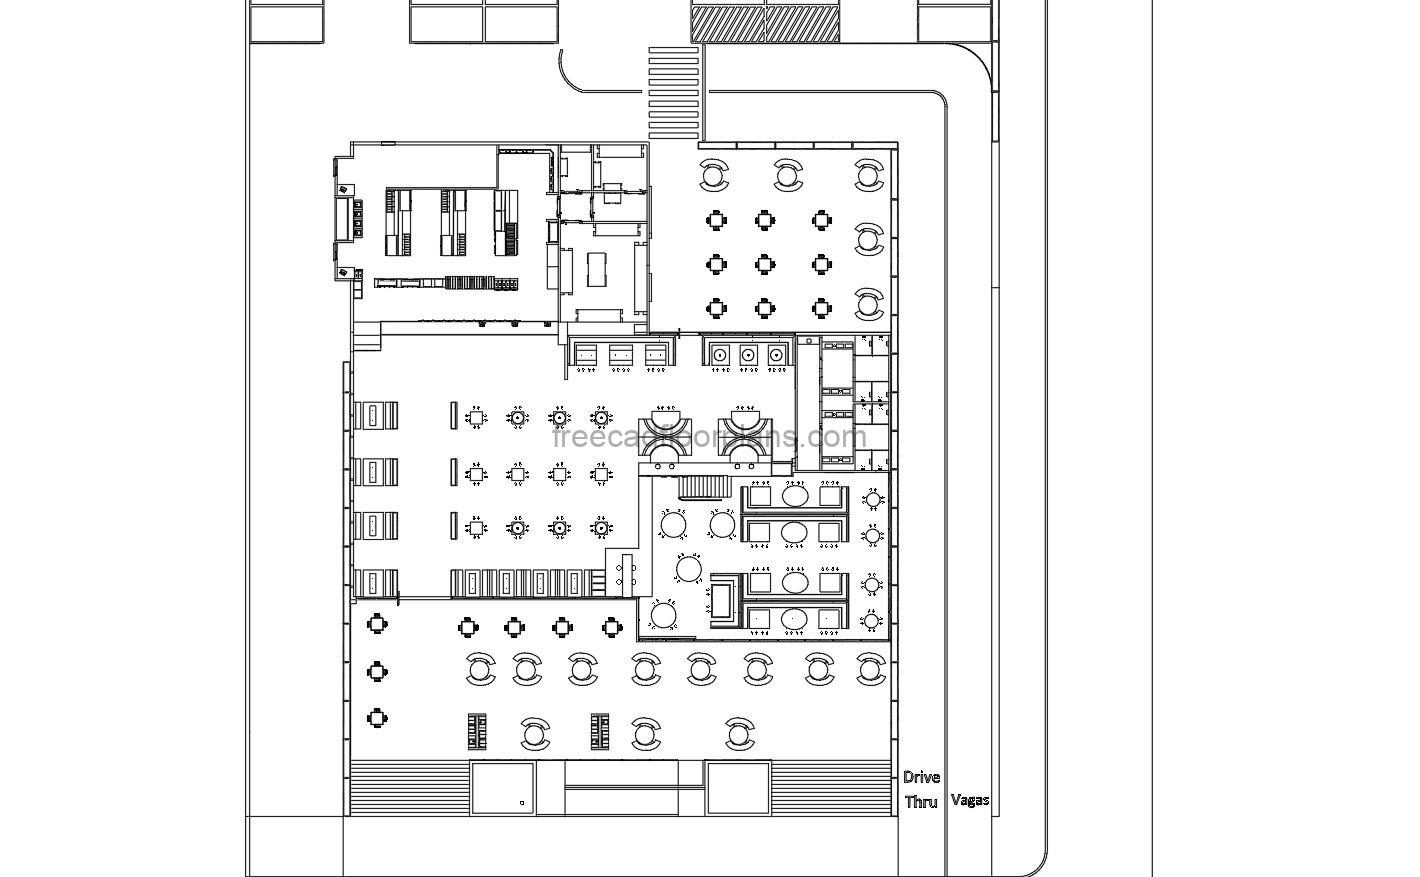 McDonalds Restaurant furnished floor plan in autocad dwg format for free download